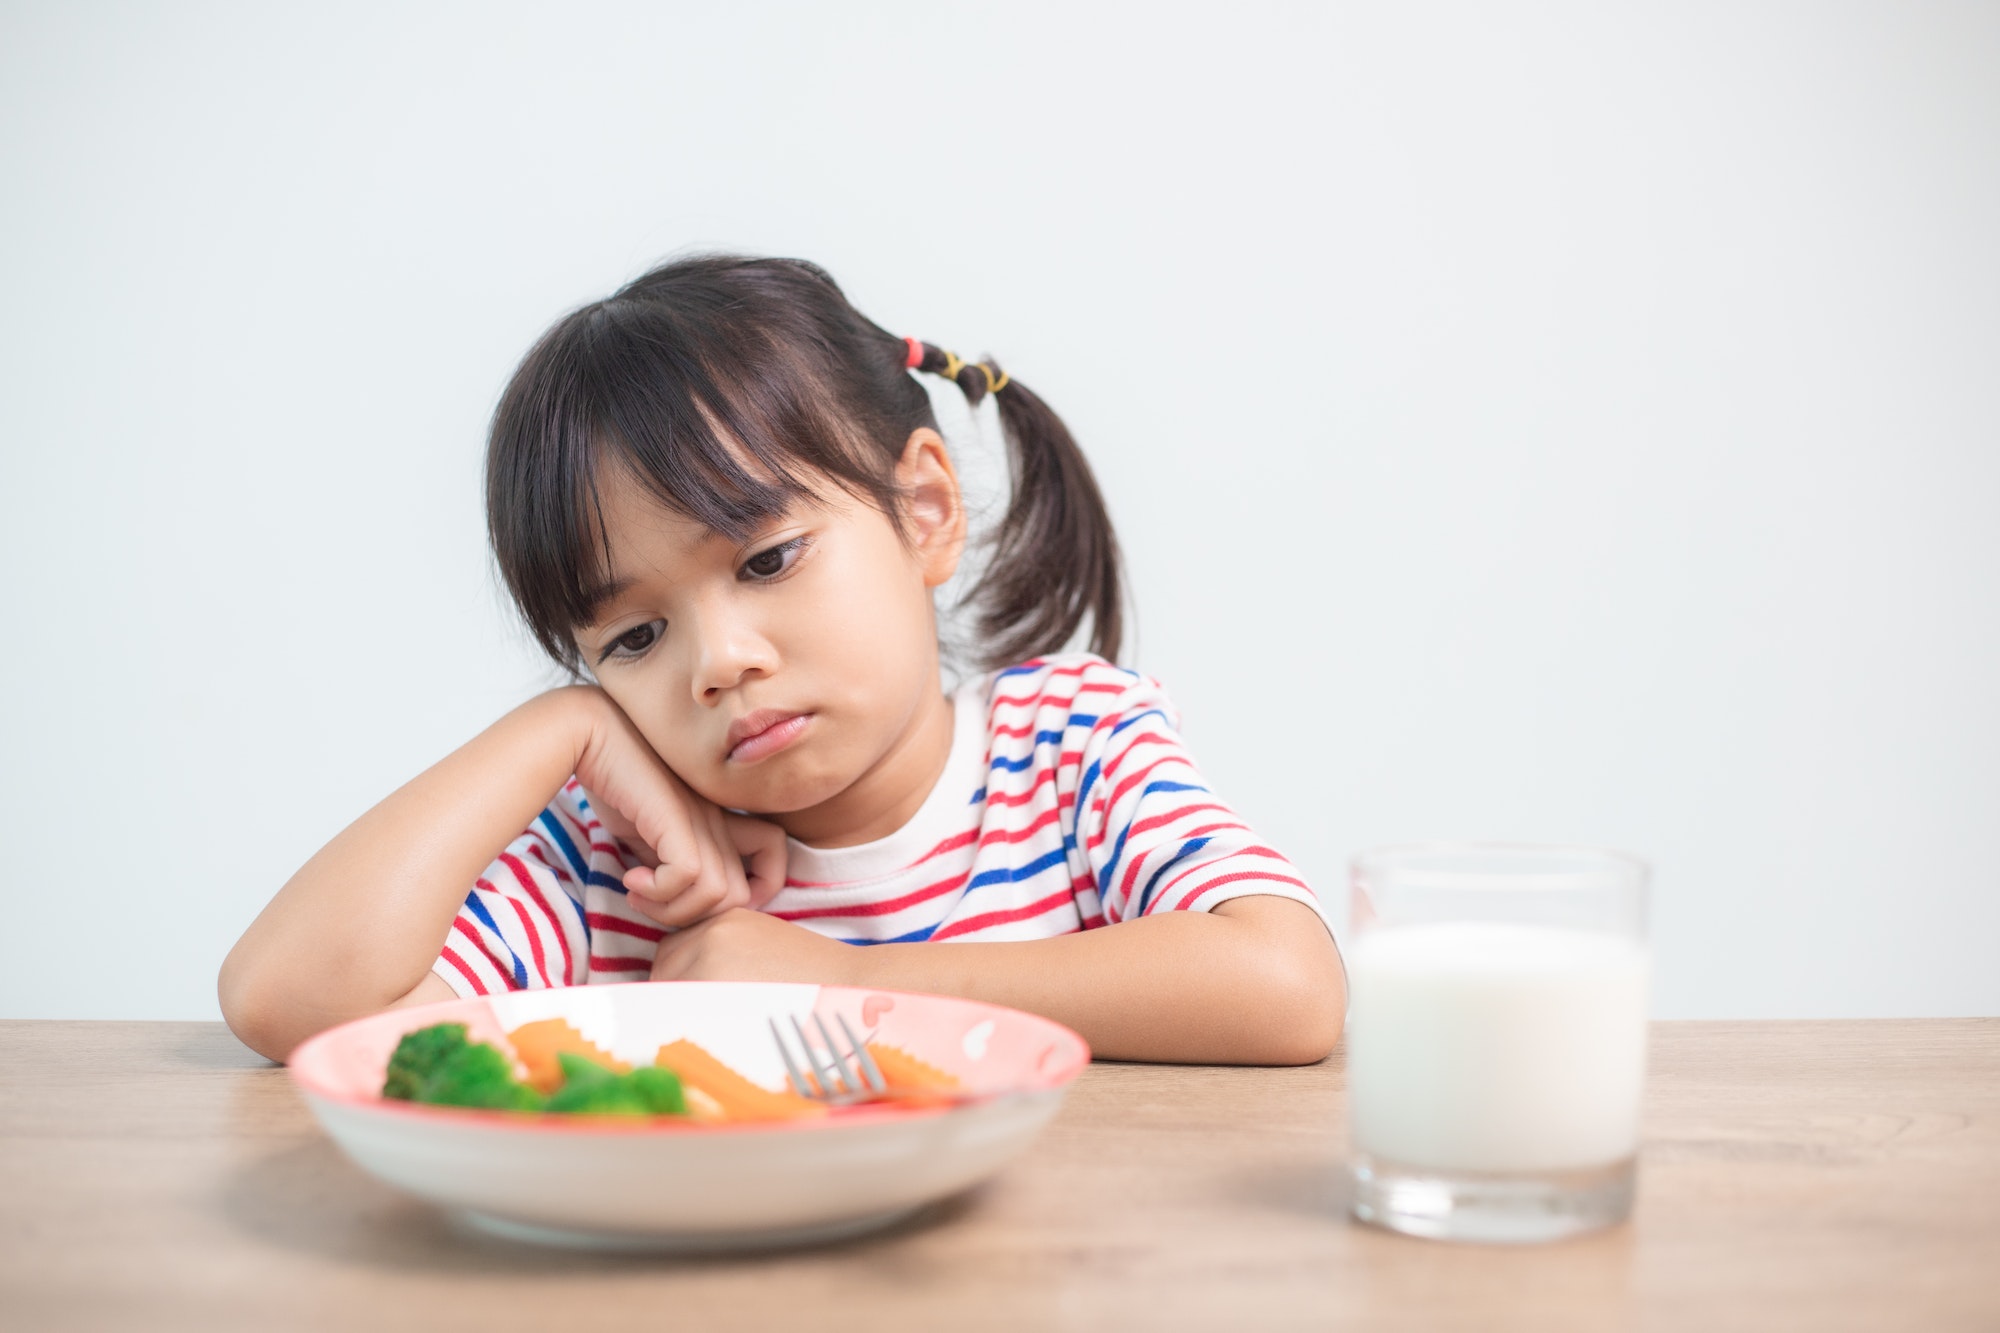 Nutrition healthy eating habits for kids concept. Children do not like to eat vegetables.